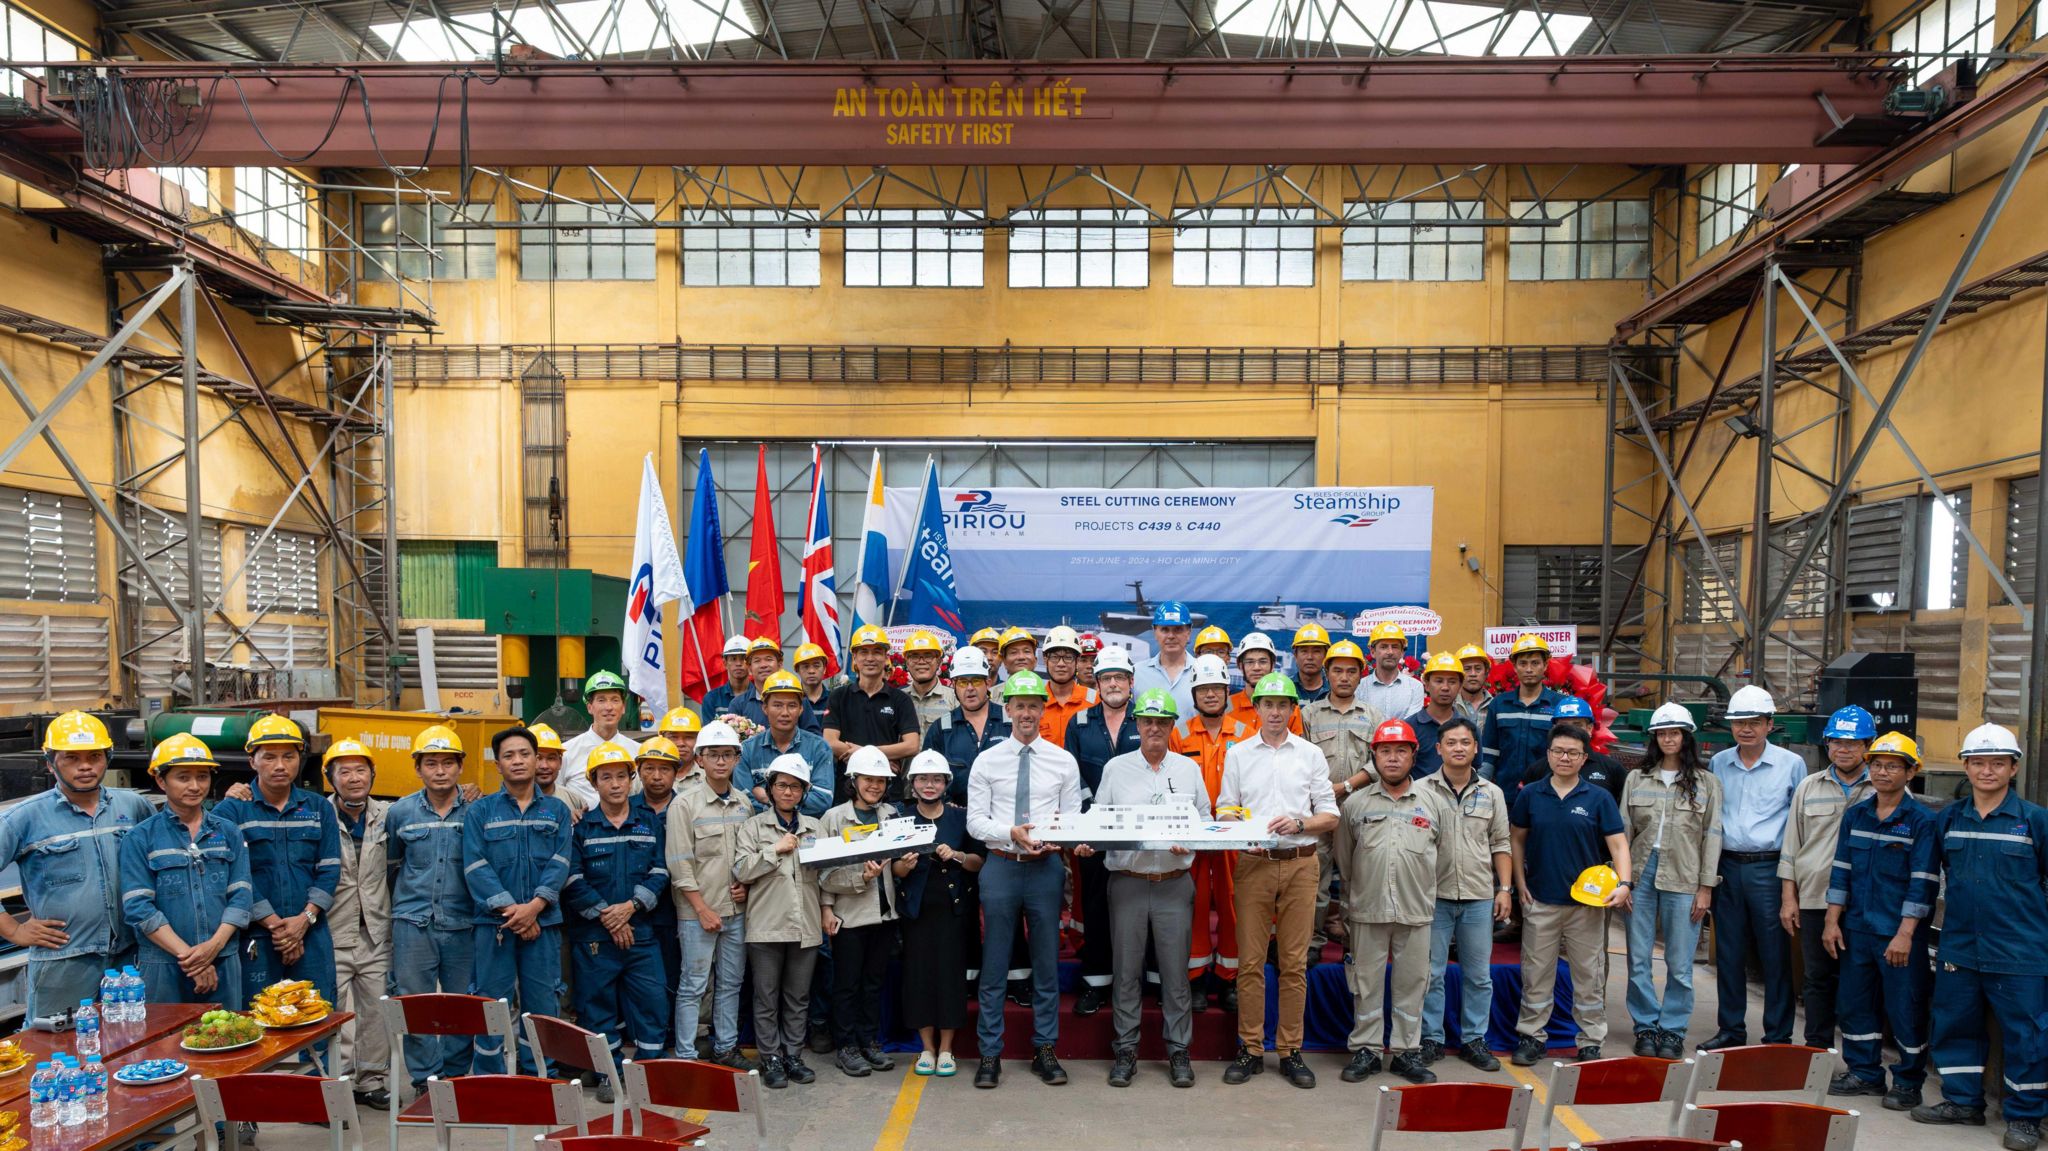 Steel cutting ceremony at Piriou’s Shipyard in Vietnam